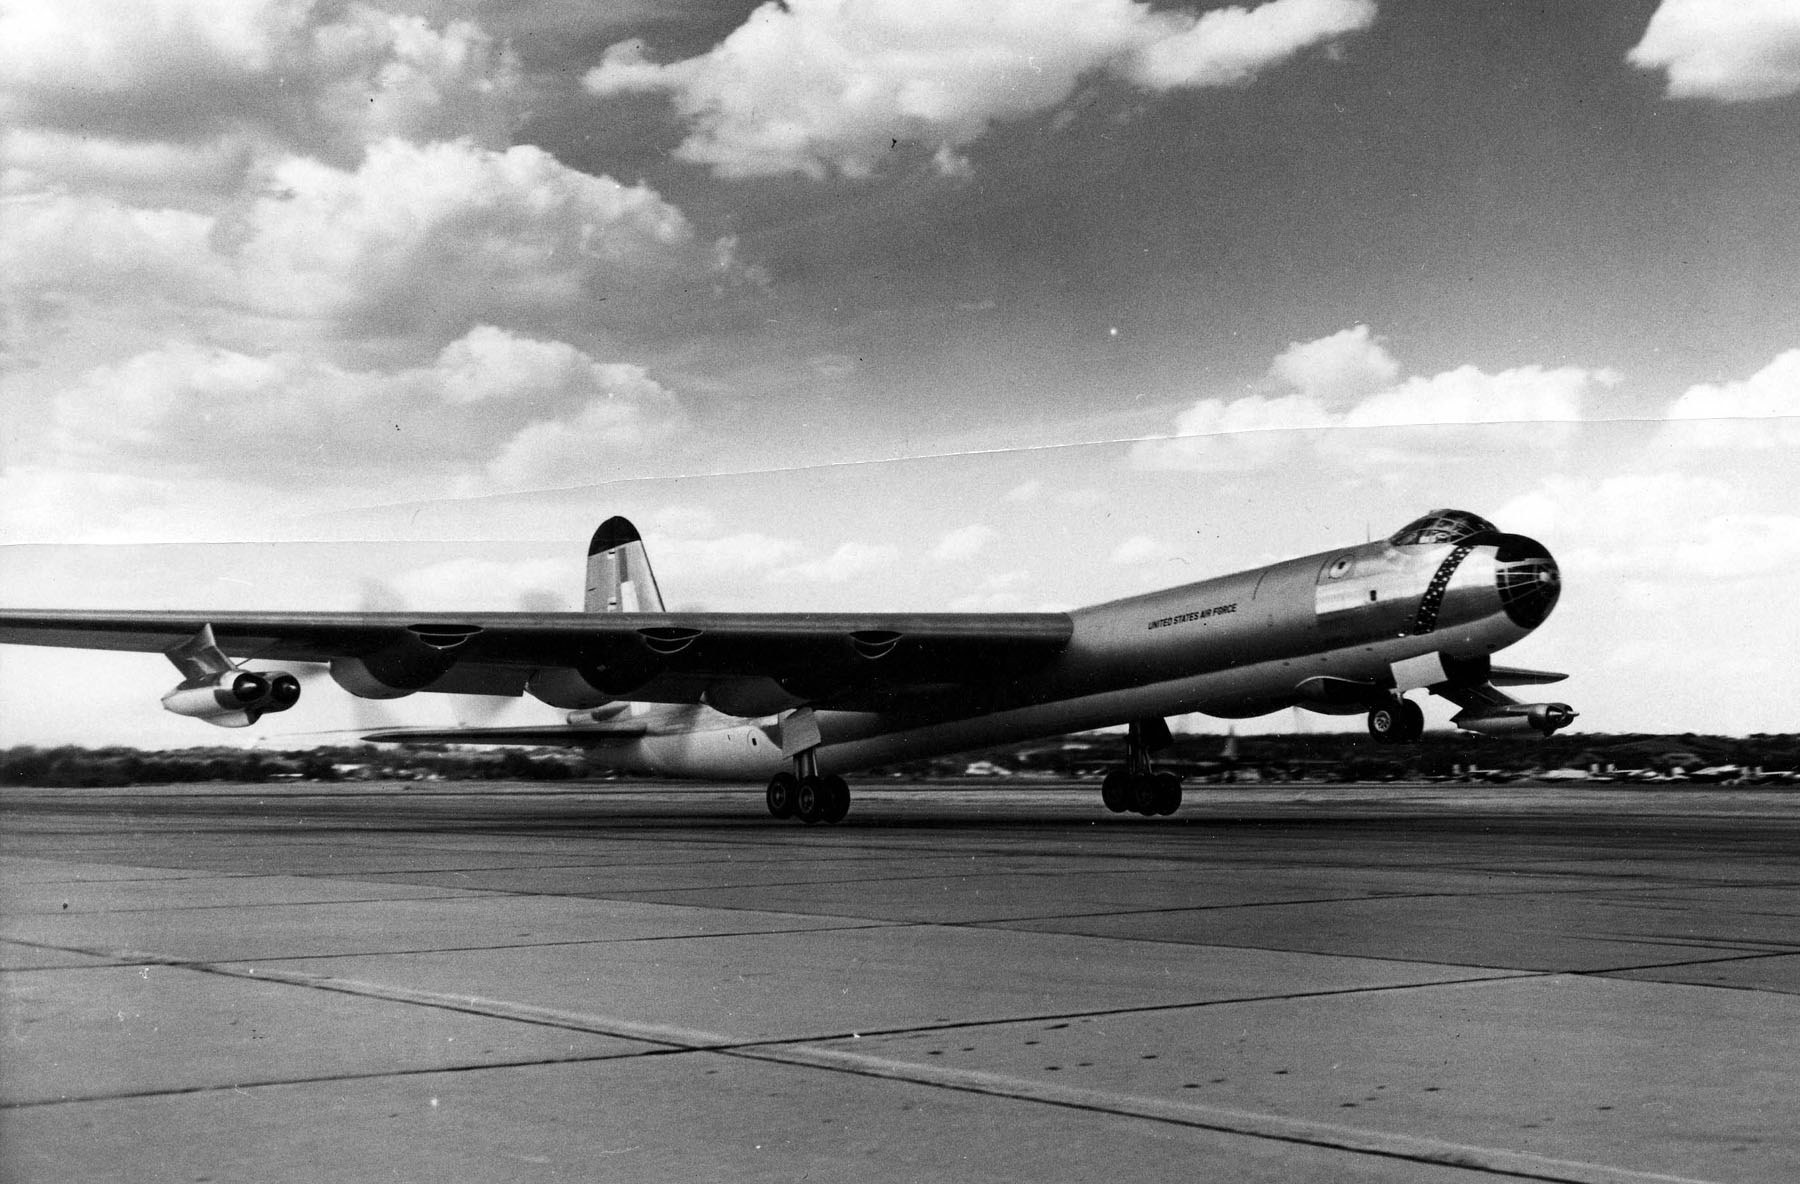 convair-b-36j-75-cf-sn-52-2827-the-last-production-b-36j-u-s-air-force-photo-060720-f-1234s-029.jpg